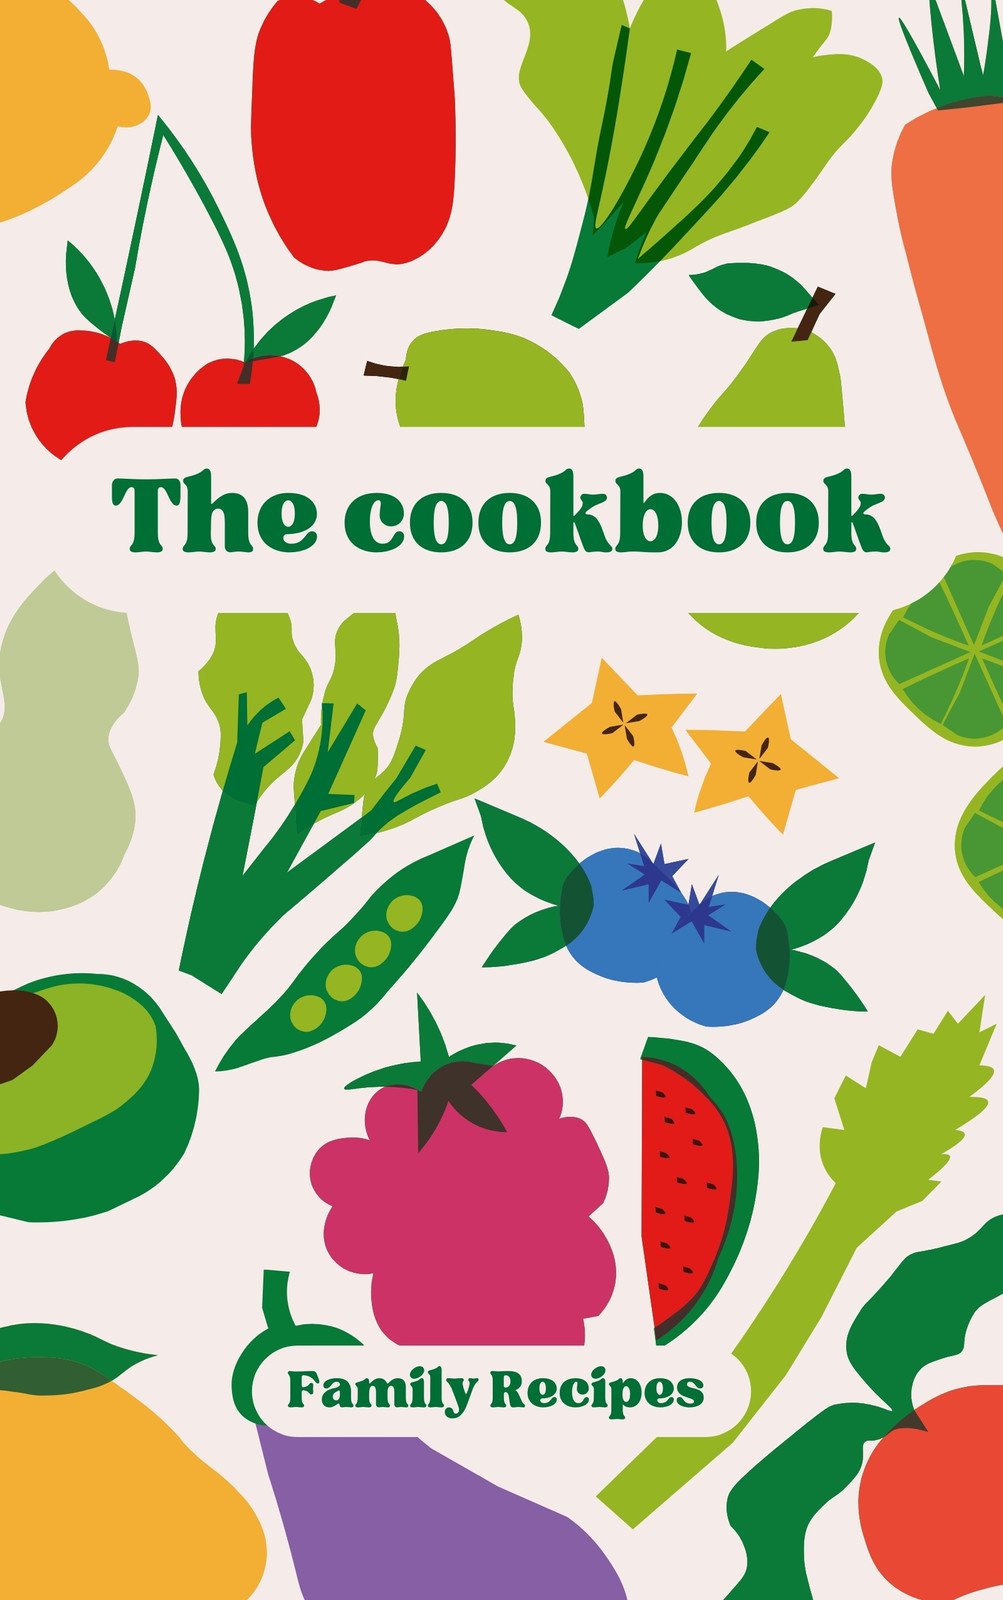 https://marketplace.canva.com/EAFMEZbedMk/2/0/1003w/canva-ebook-cover-recipe-cookbook-orange-fB3hQsb6IRQ.jpg